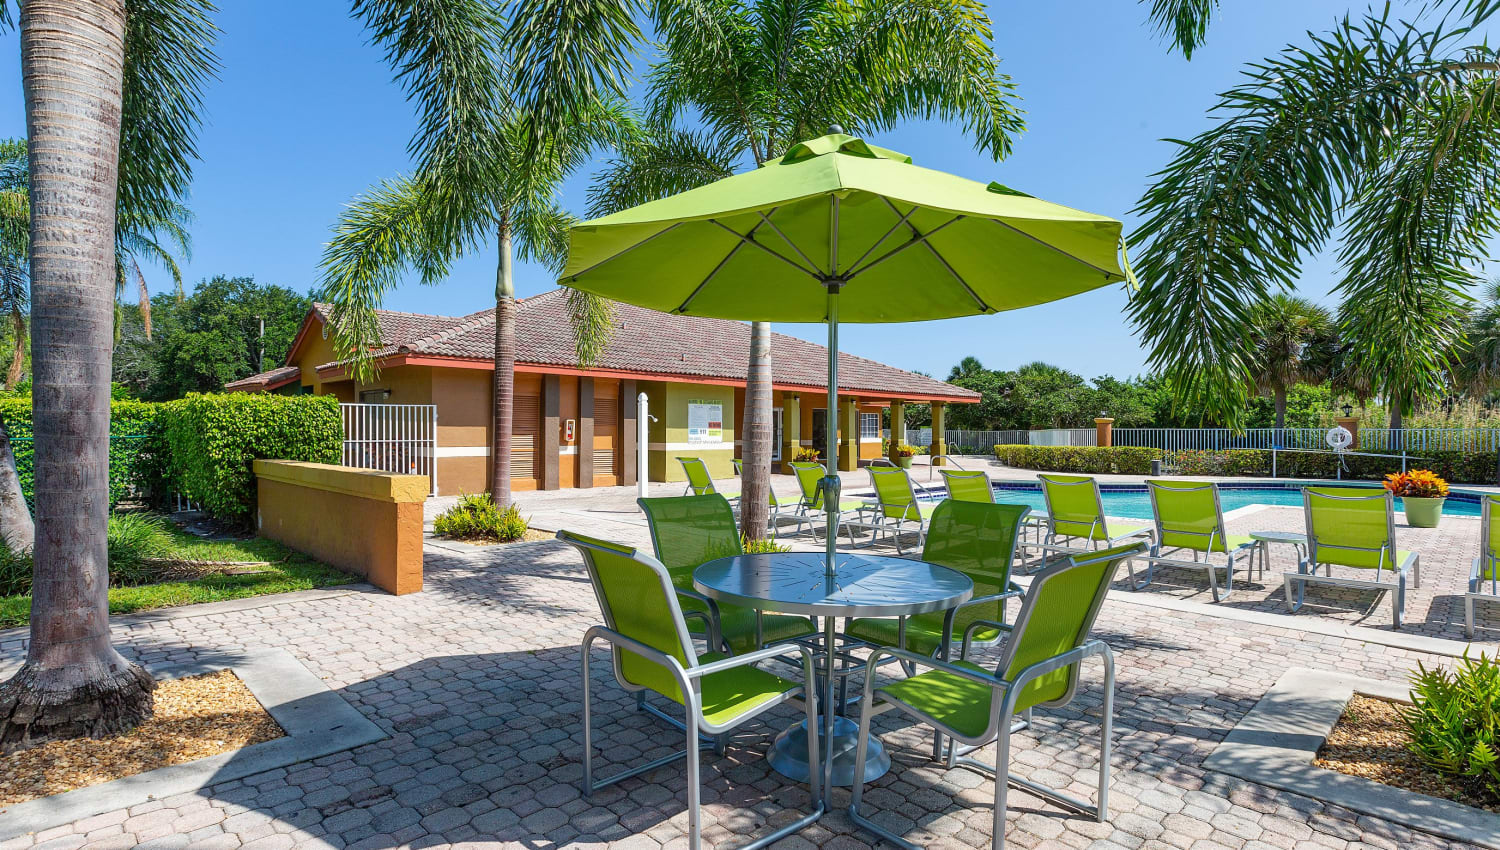 Pool area at Whalers Cove Apartments in Boynton Beach, Florida